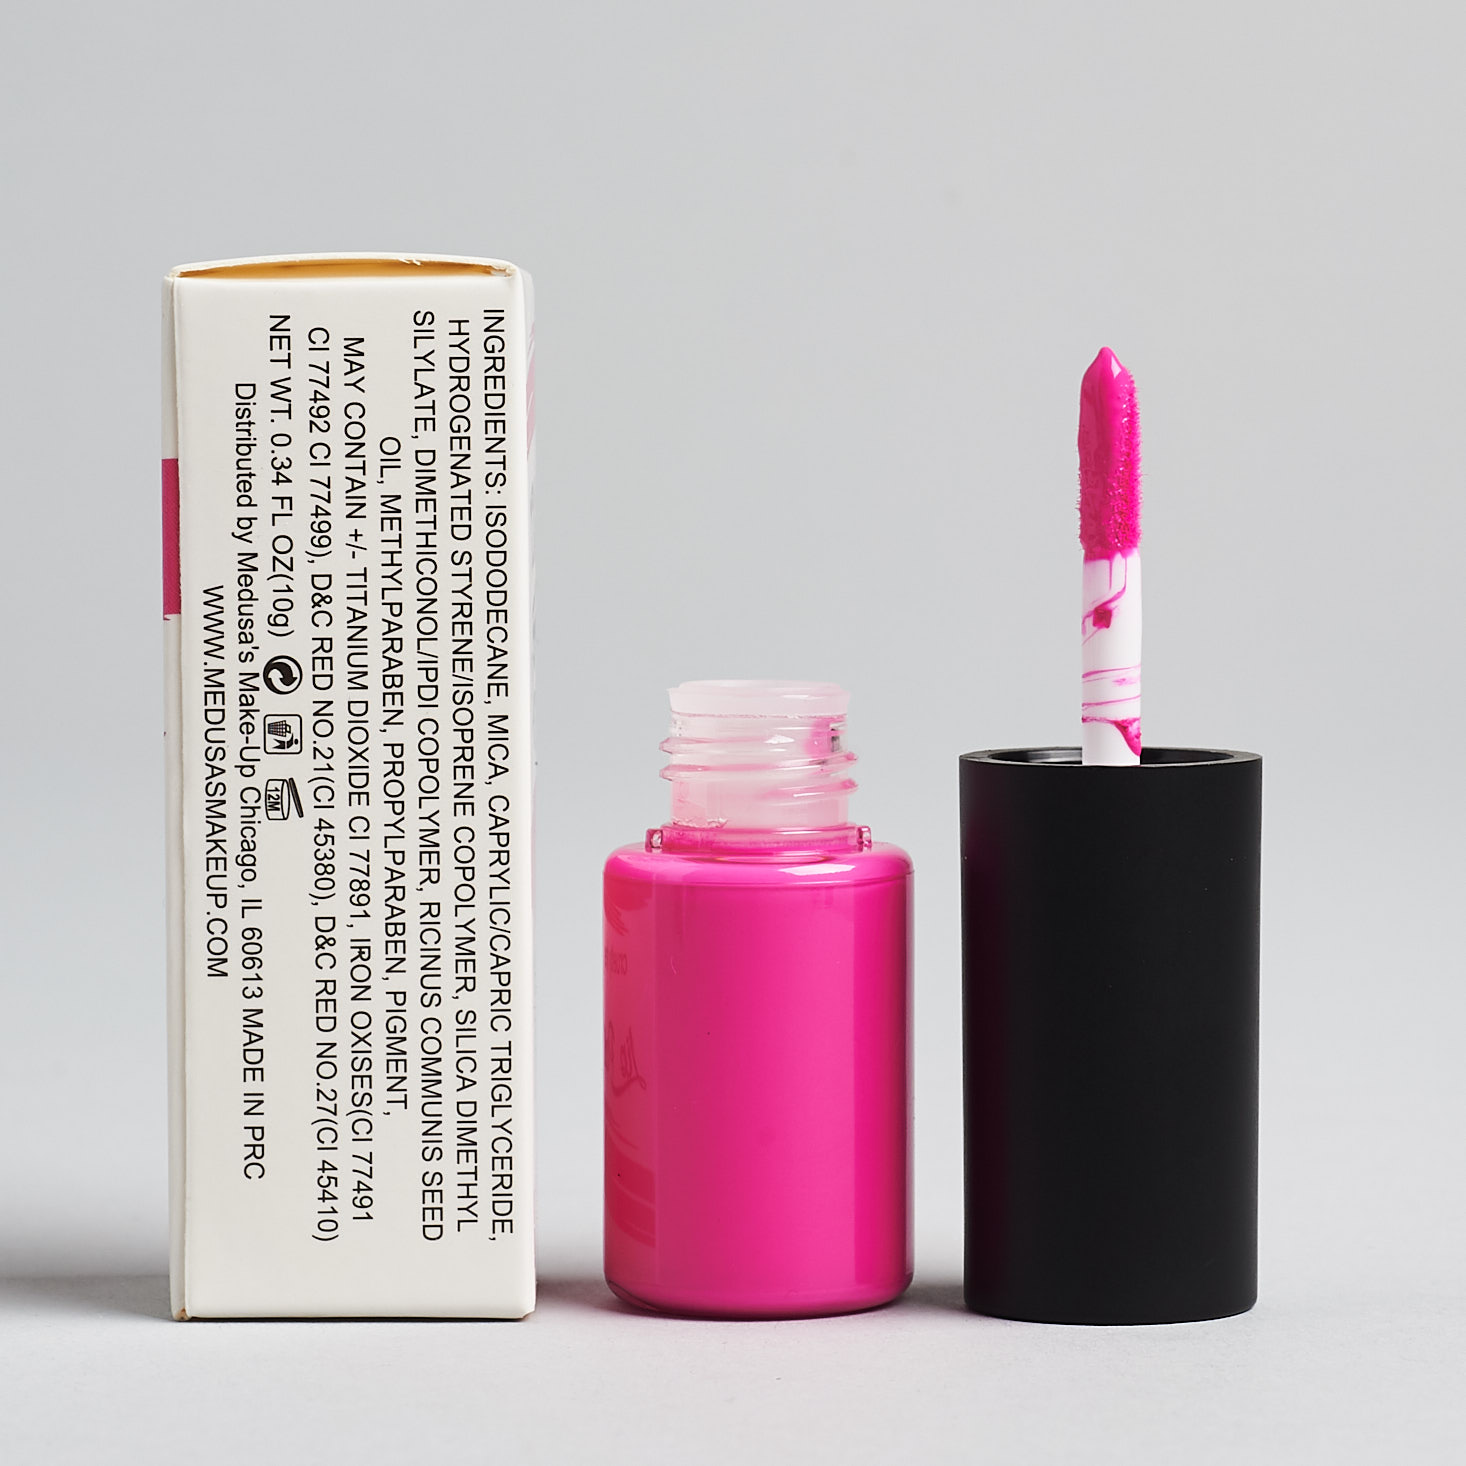 Medusas Makeup May 2019 makeup subscription box review lip paint open